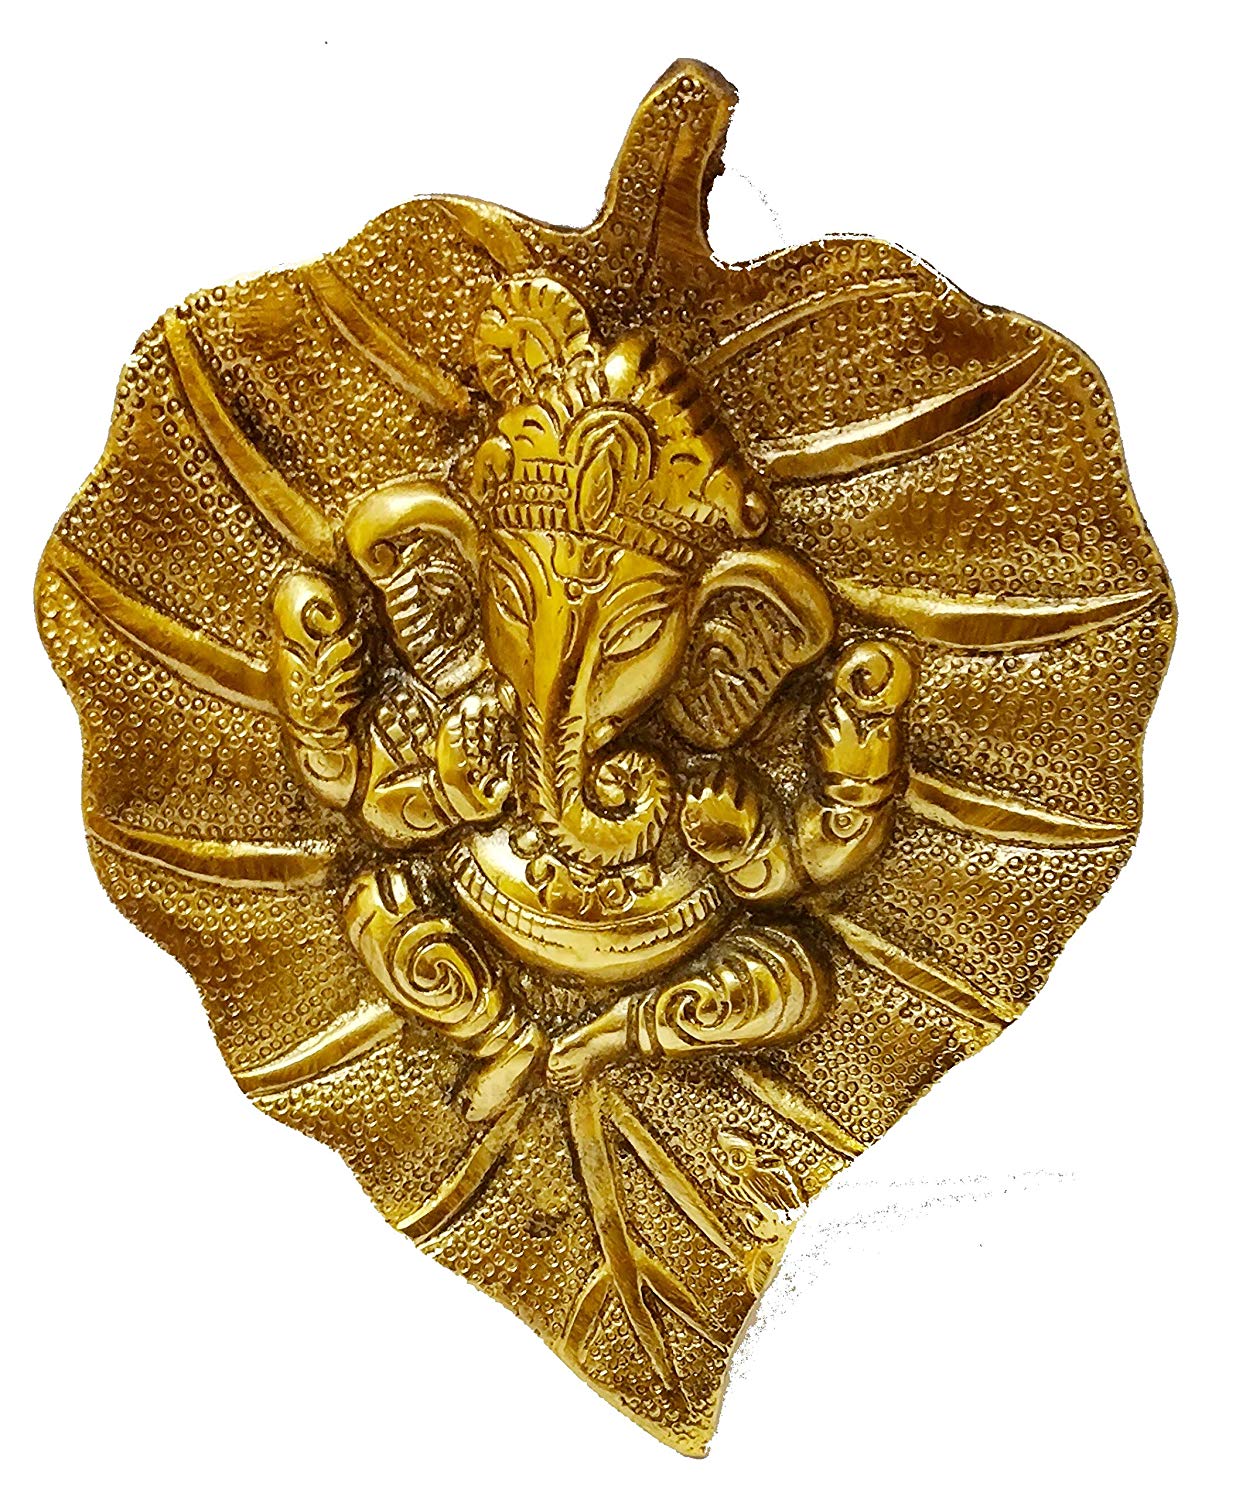 Lightahead Lord Ganesh Ganapati The Elephant god Statue Figure on Leaf in Yellow Metal Wall Hanging Great Diwali